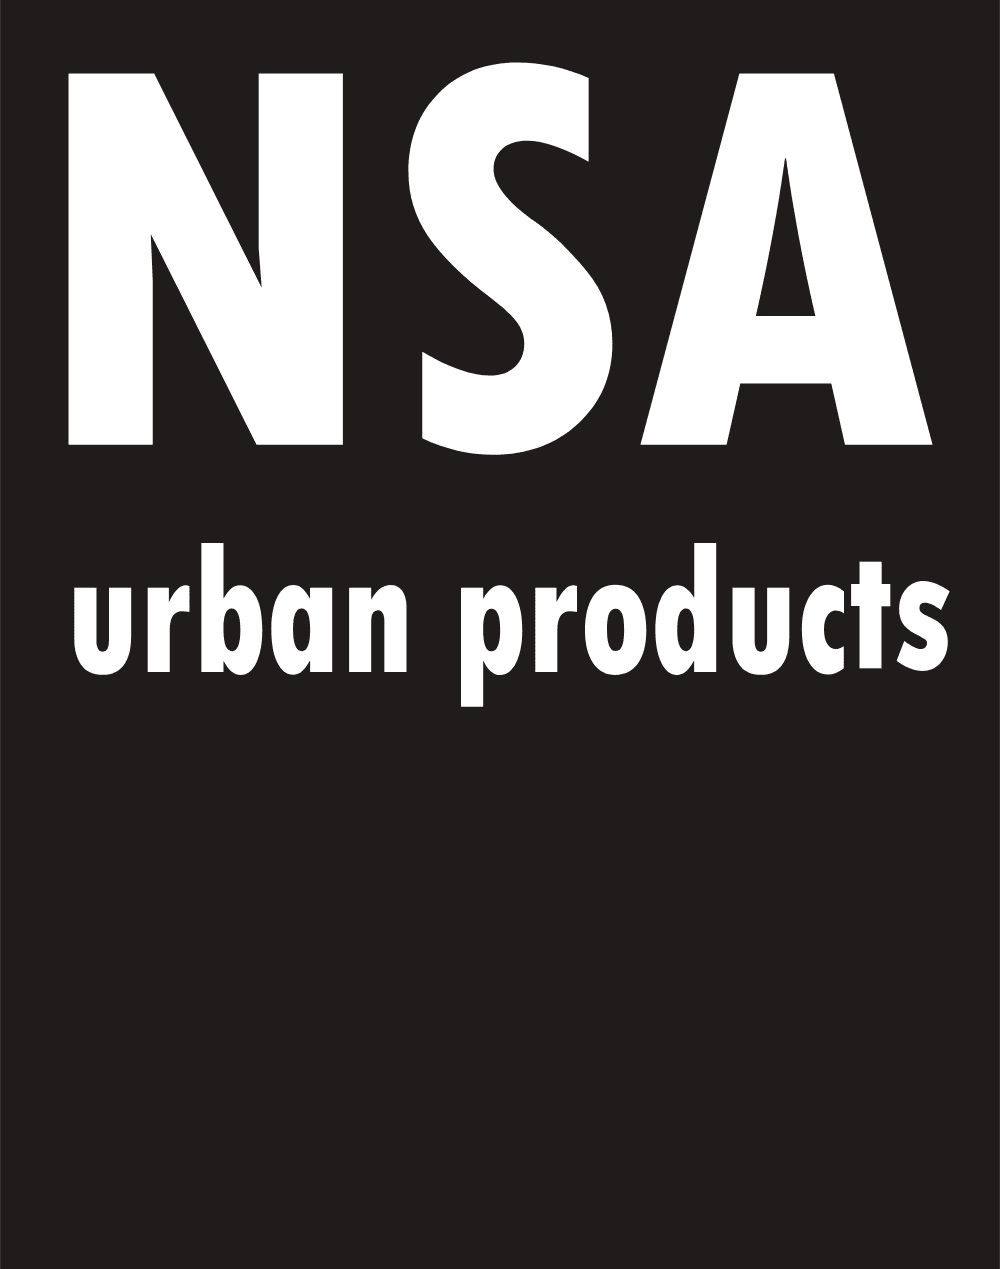 NSA urban products Logo download